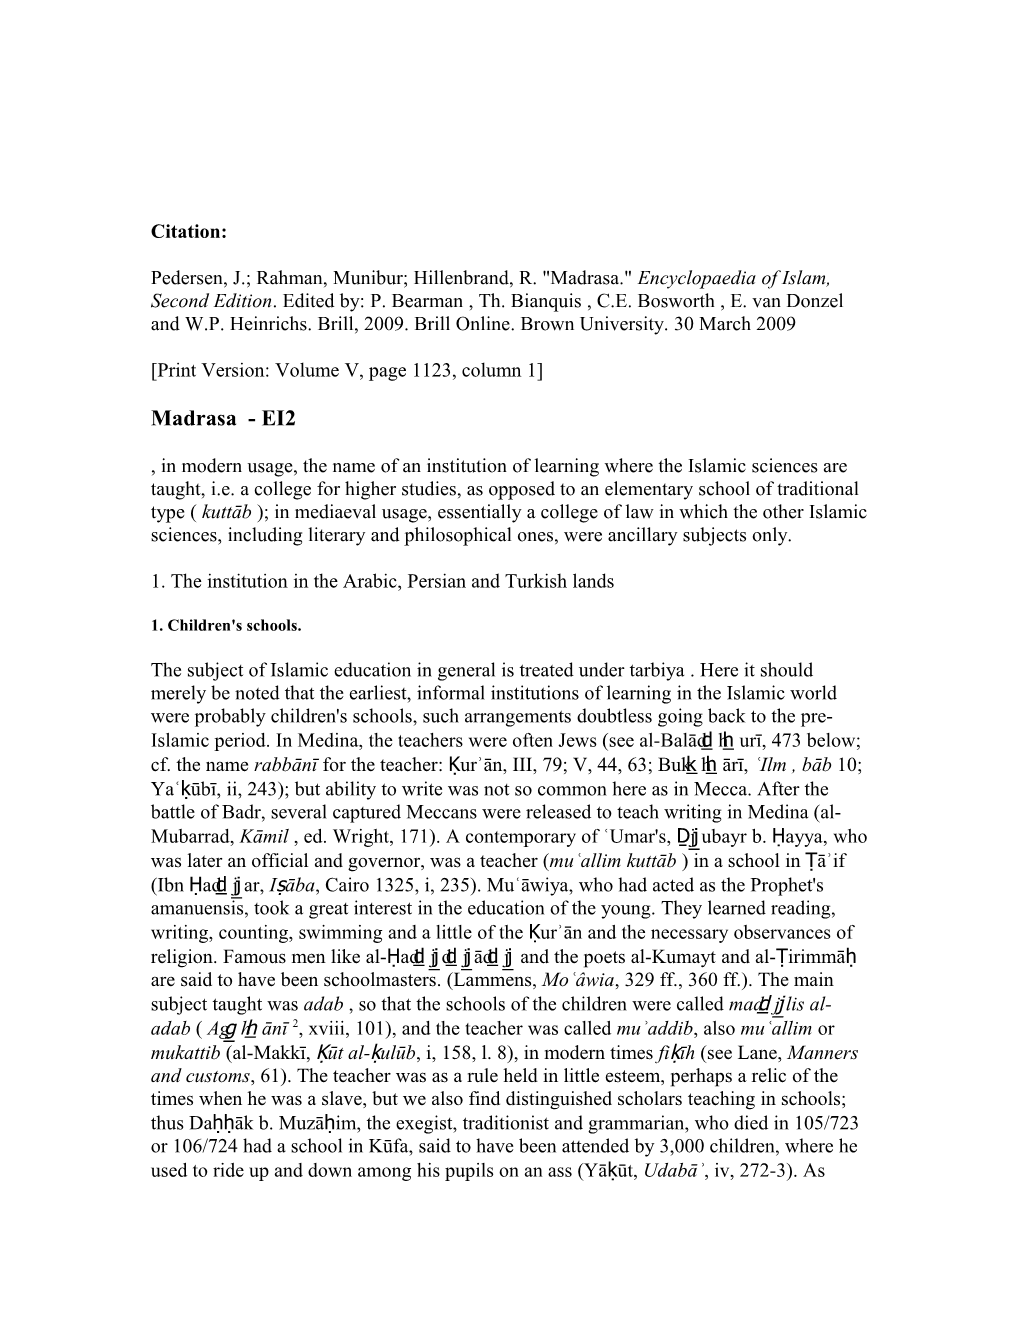 Print Version: Volume V, Page 1123, Column 1